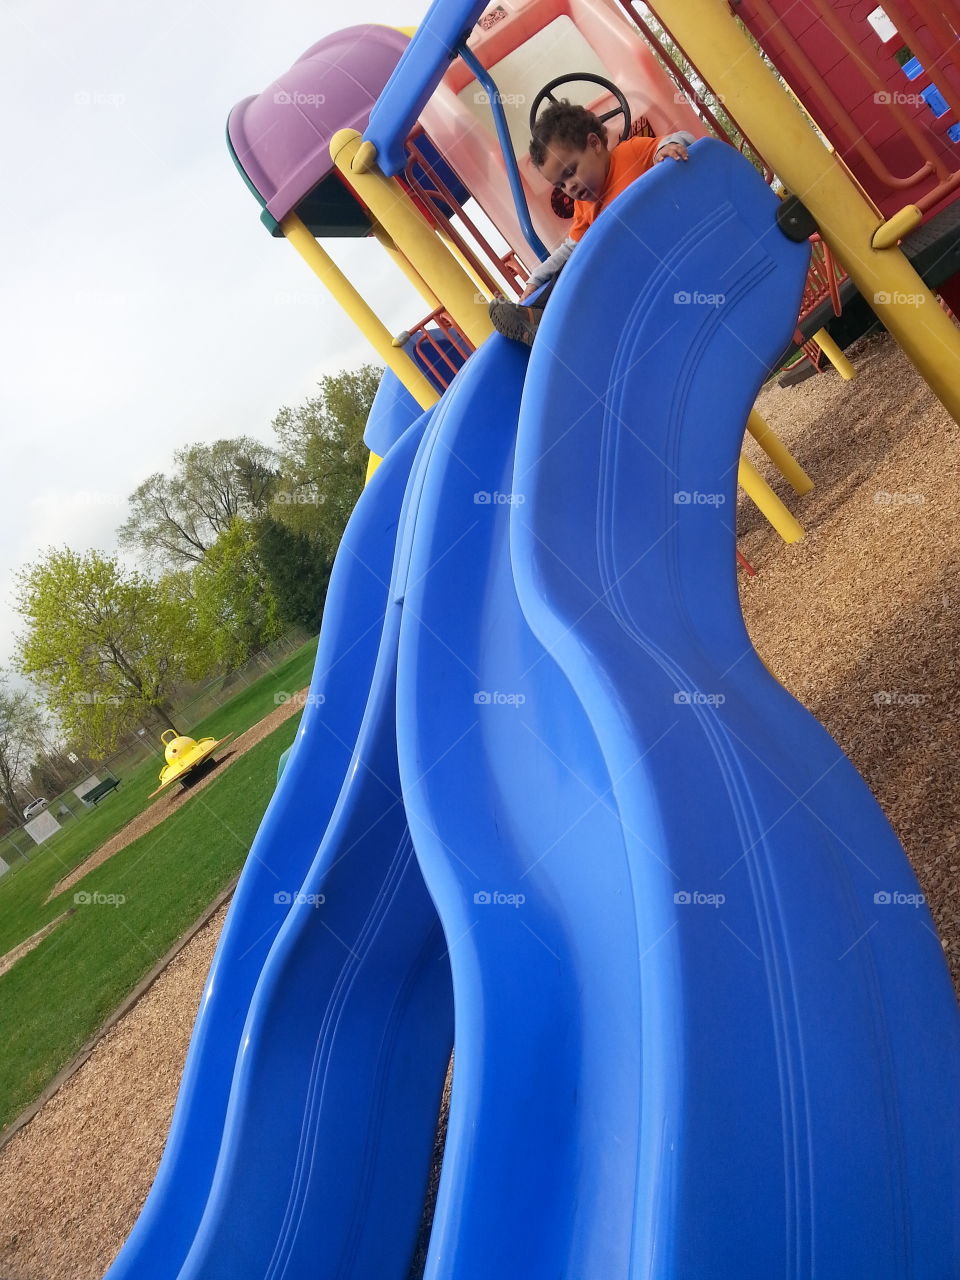 blue slide. blue slide at playground